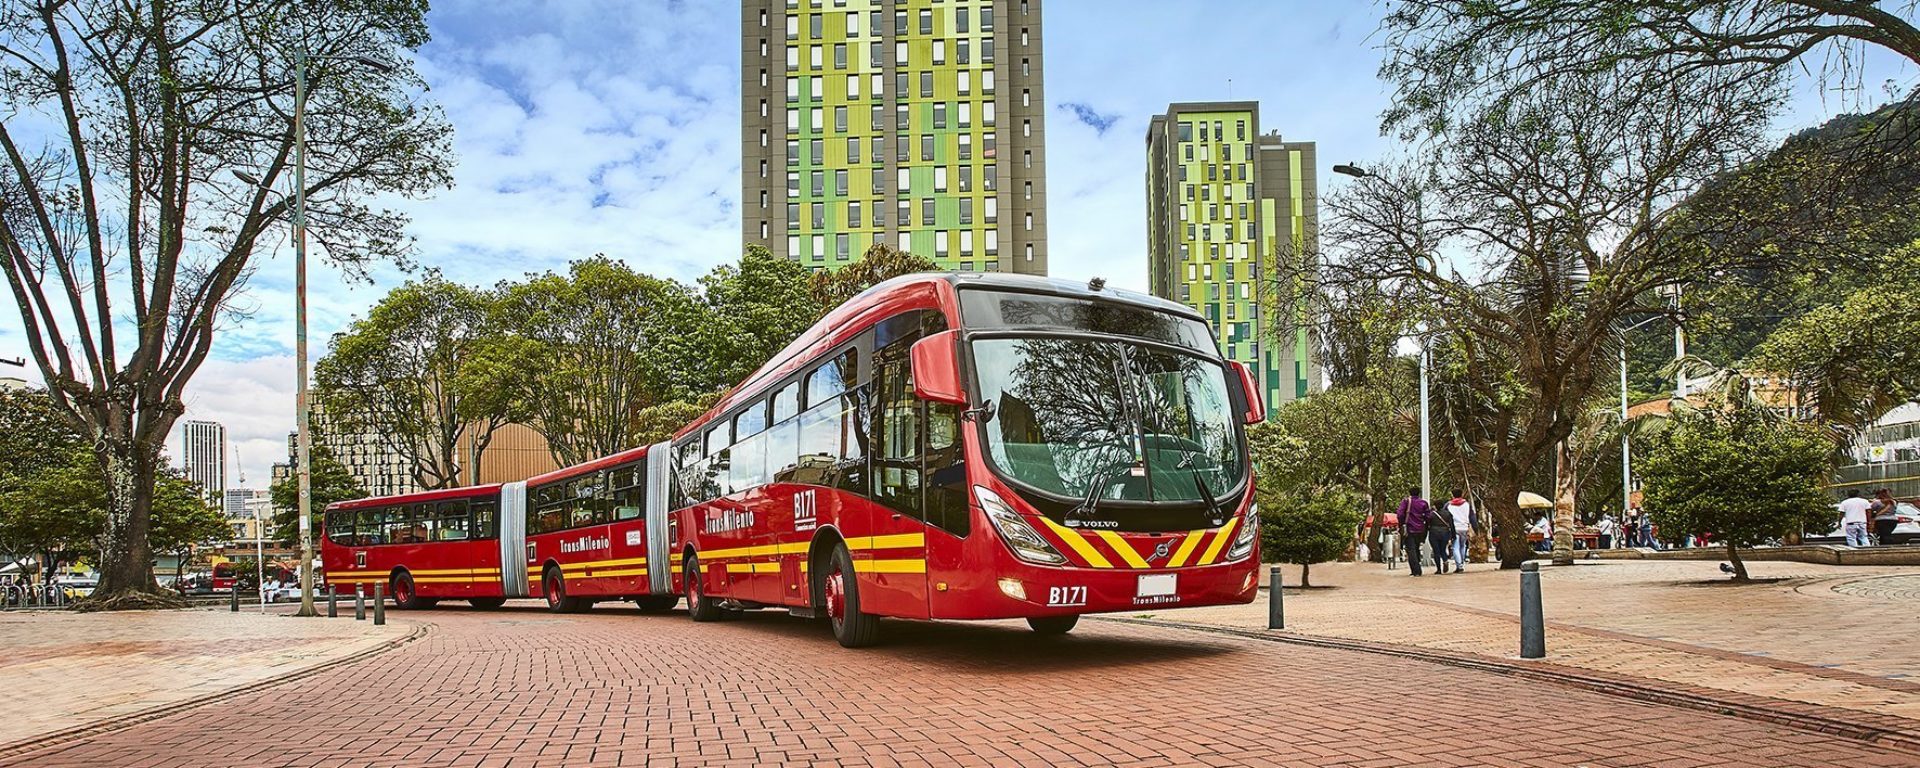 Transmilenio Transdev Bogota bus biarticulated bi articulé rapid transit BHNS BRT